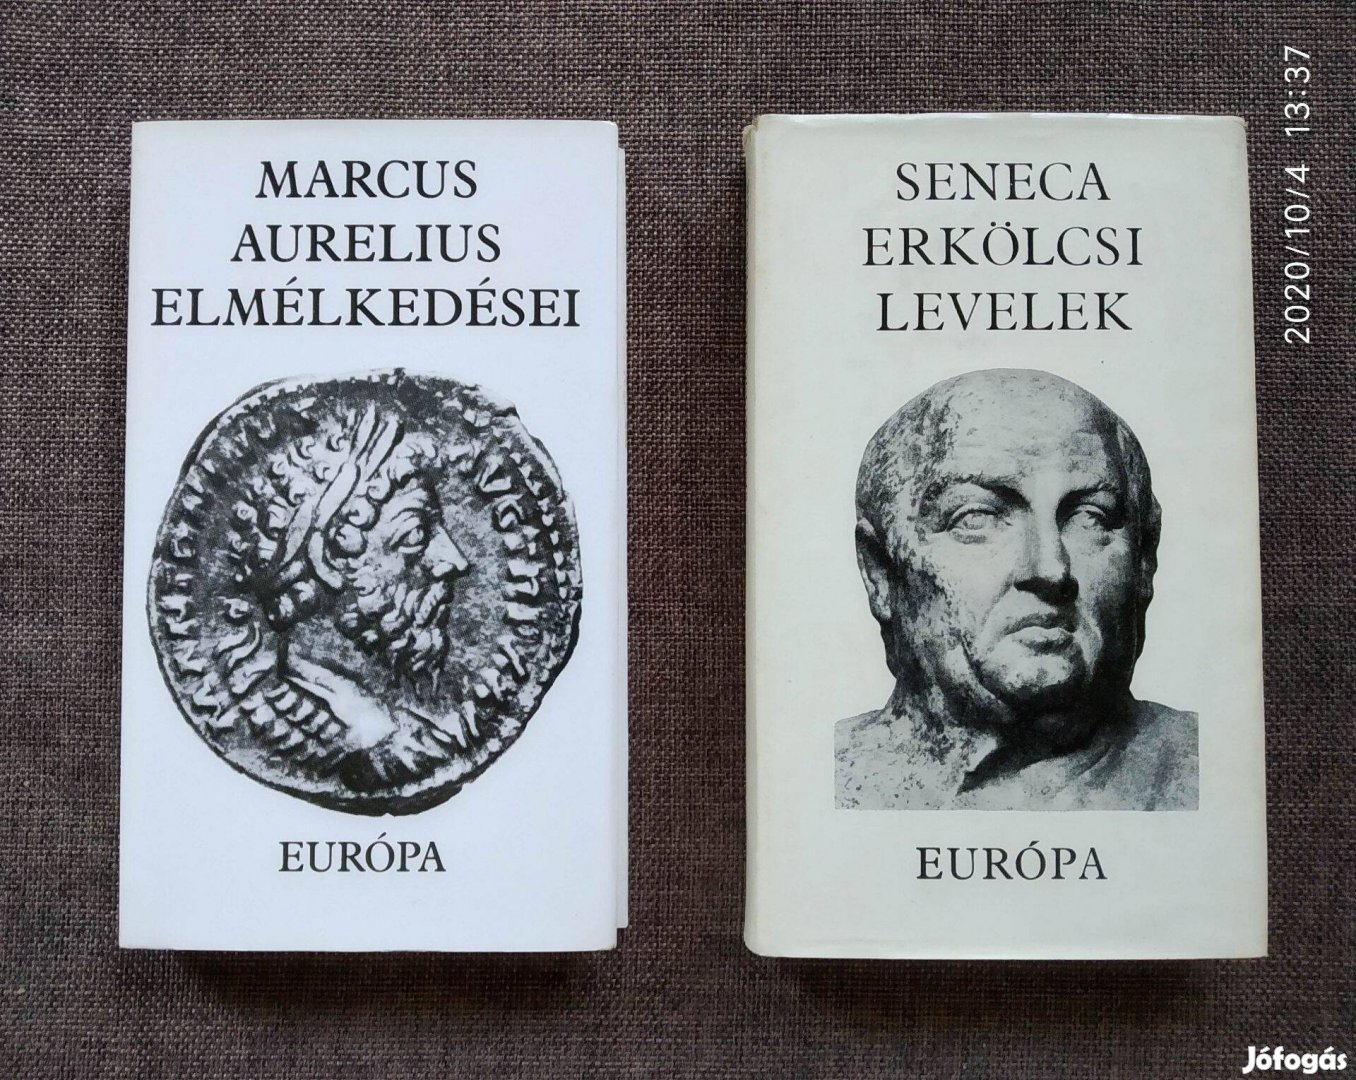 Marcus Aurelius Elmélkedései